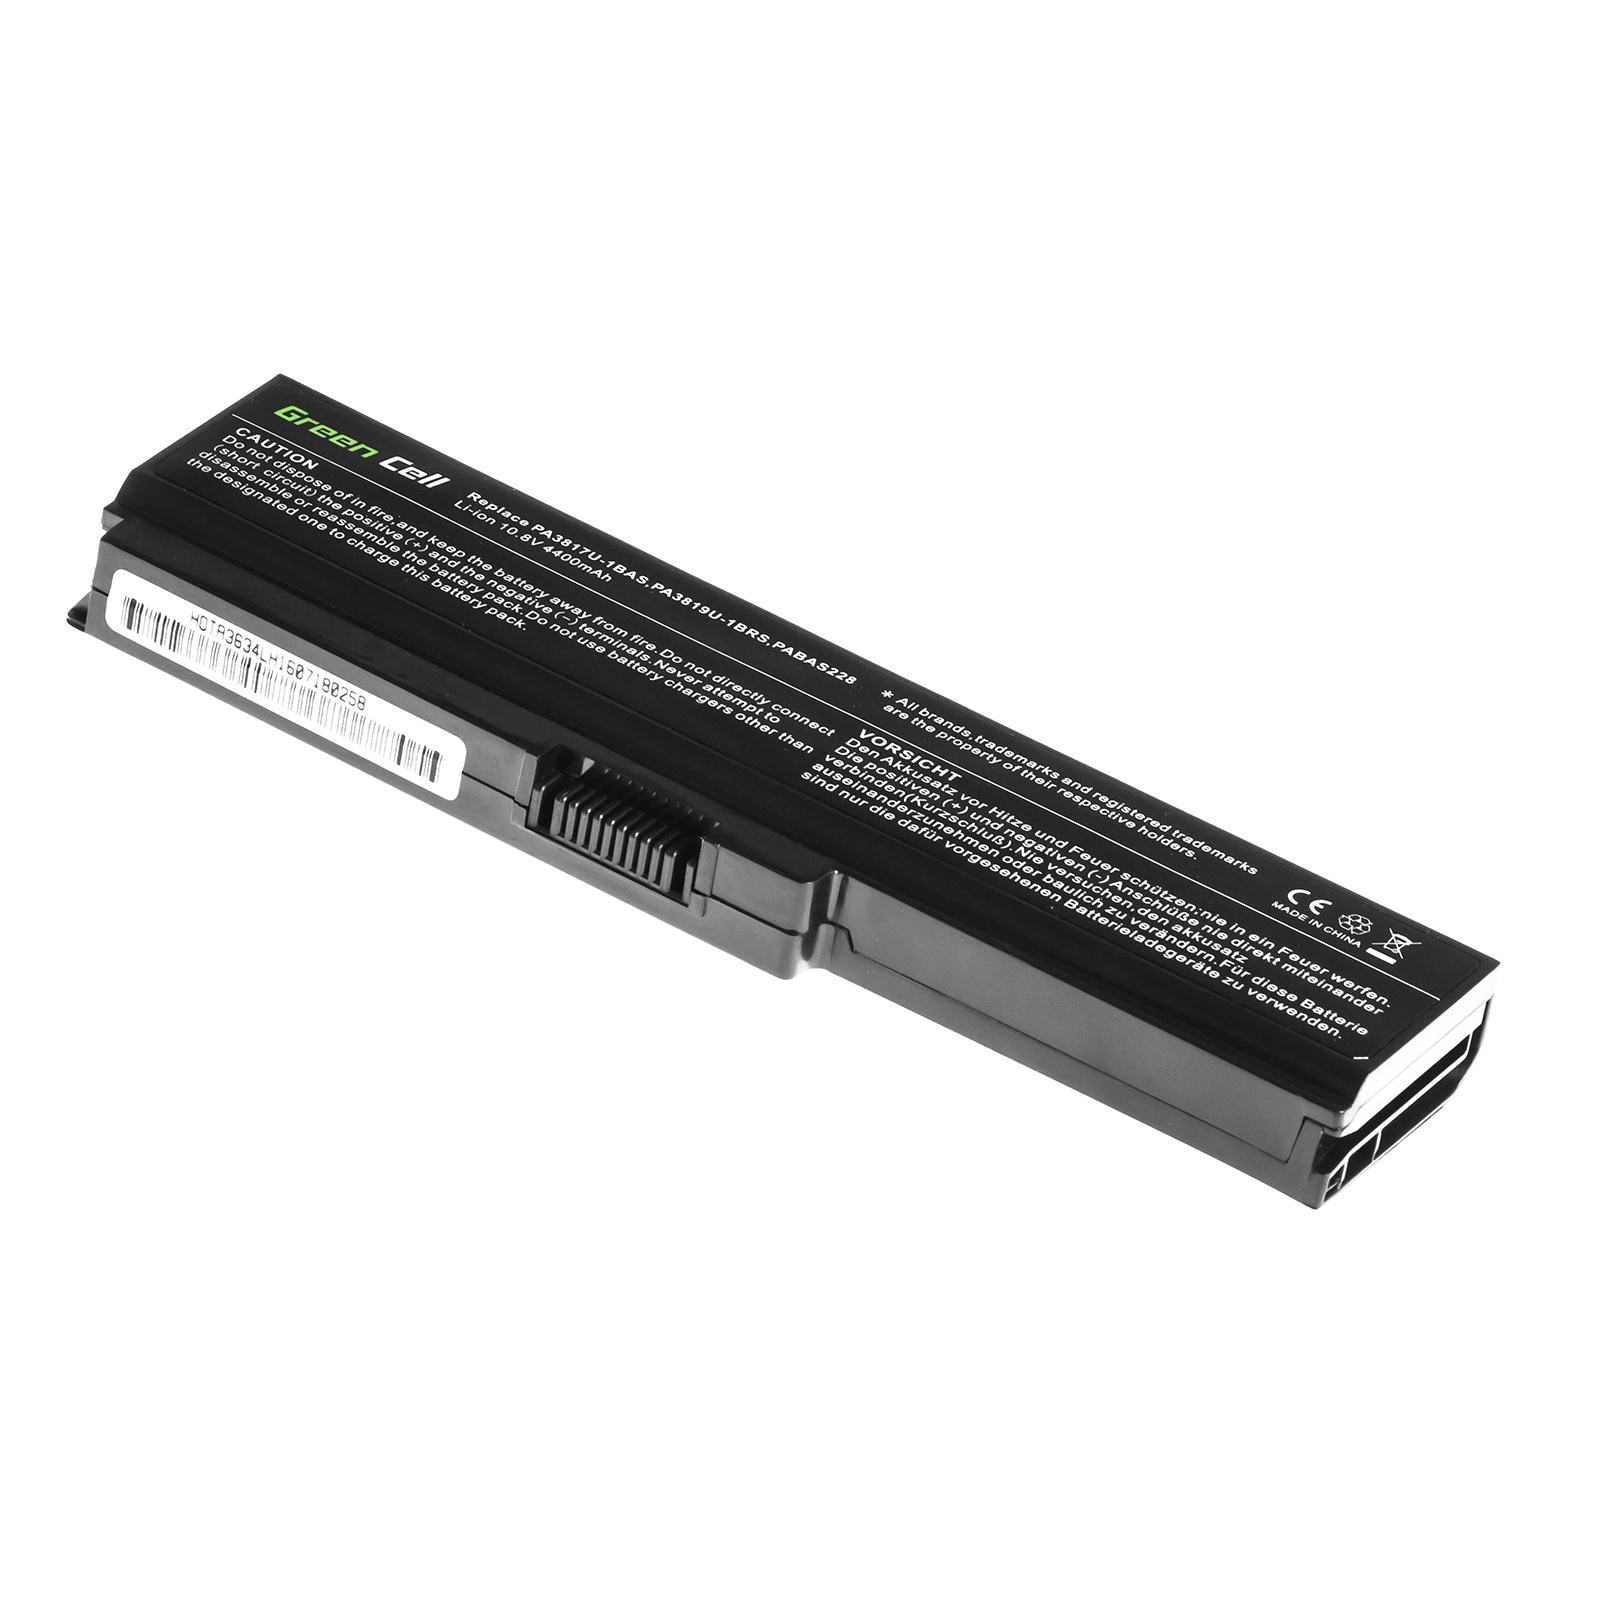 entrepreneur Hollow grade Baterie laptop PA3817U-1BRS pentru Toshiba Satellite C650 C650D C655 C660  C660D C670 C670D L750 L750D L755 acumulator marca Green Cell - eMAG.ro